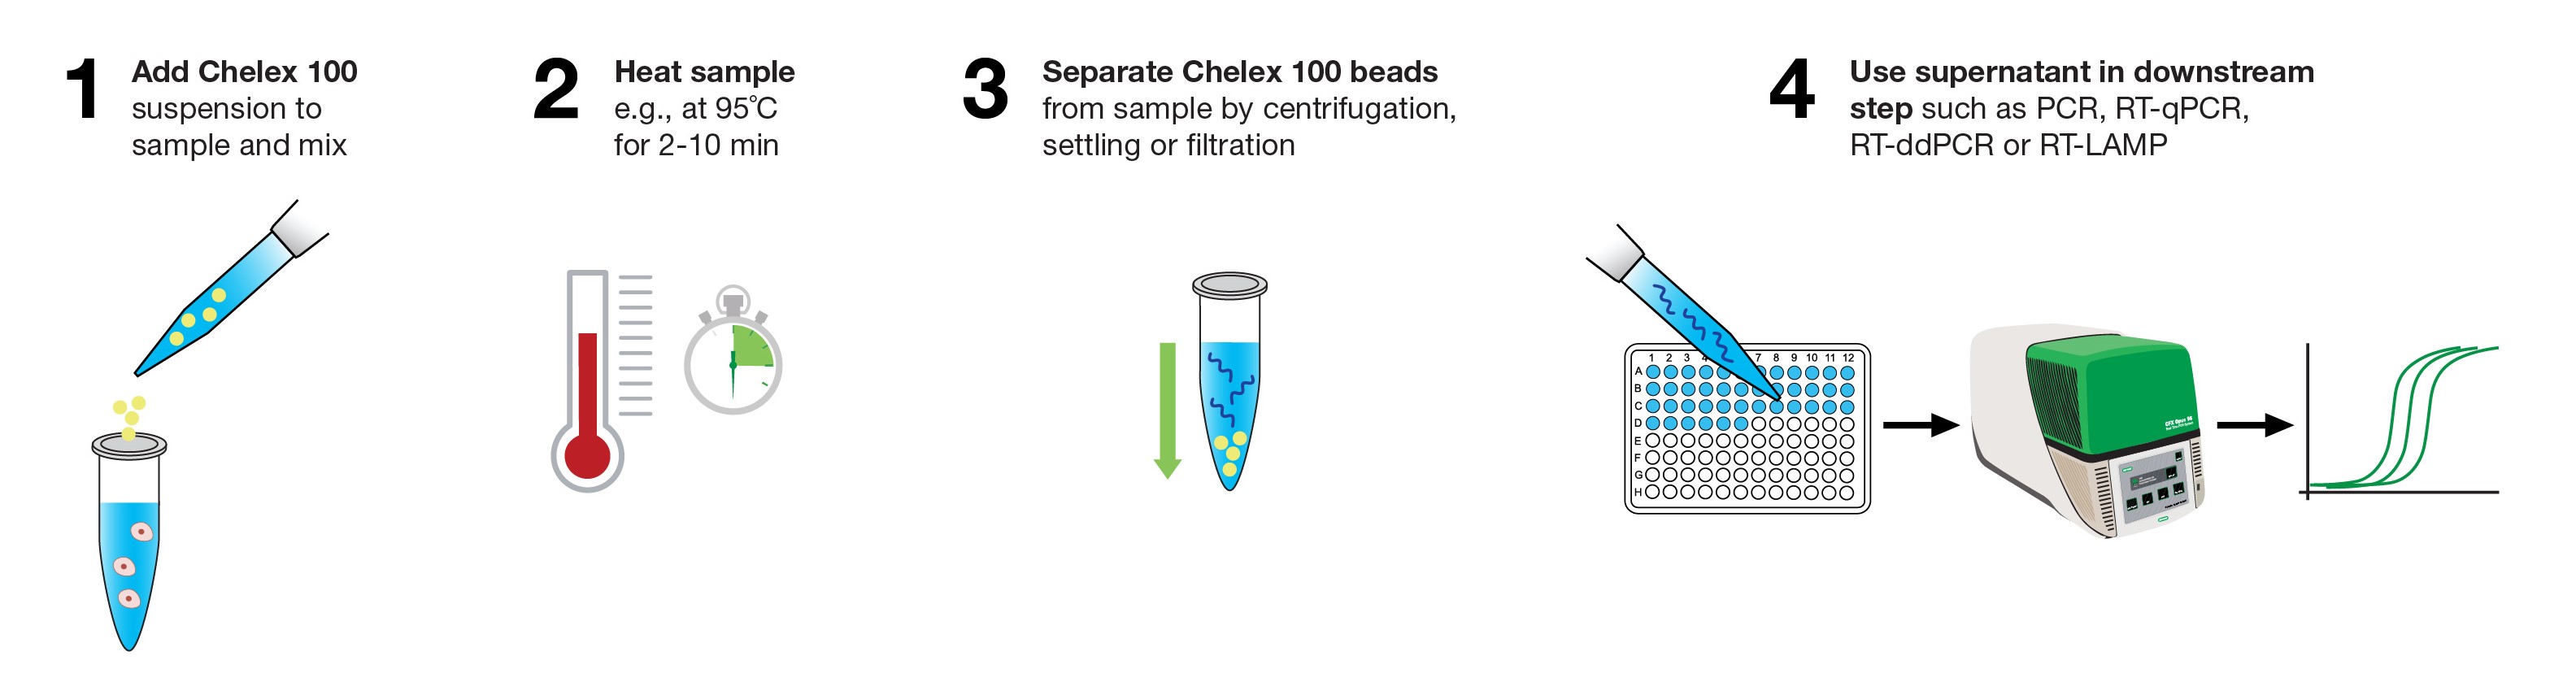 Chelex 100 Resin Sample Preparation Workflow